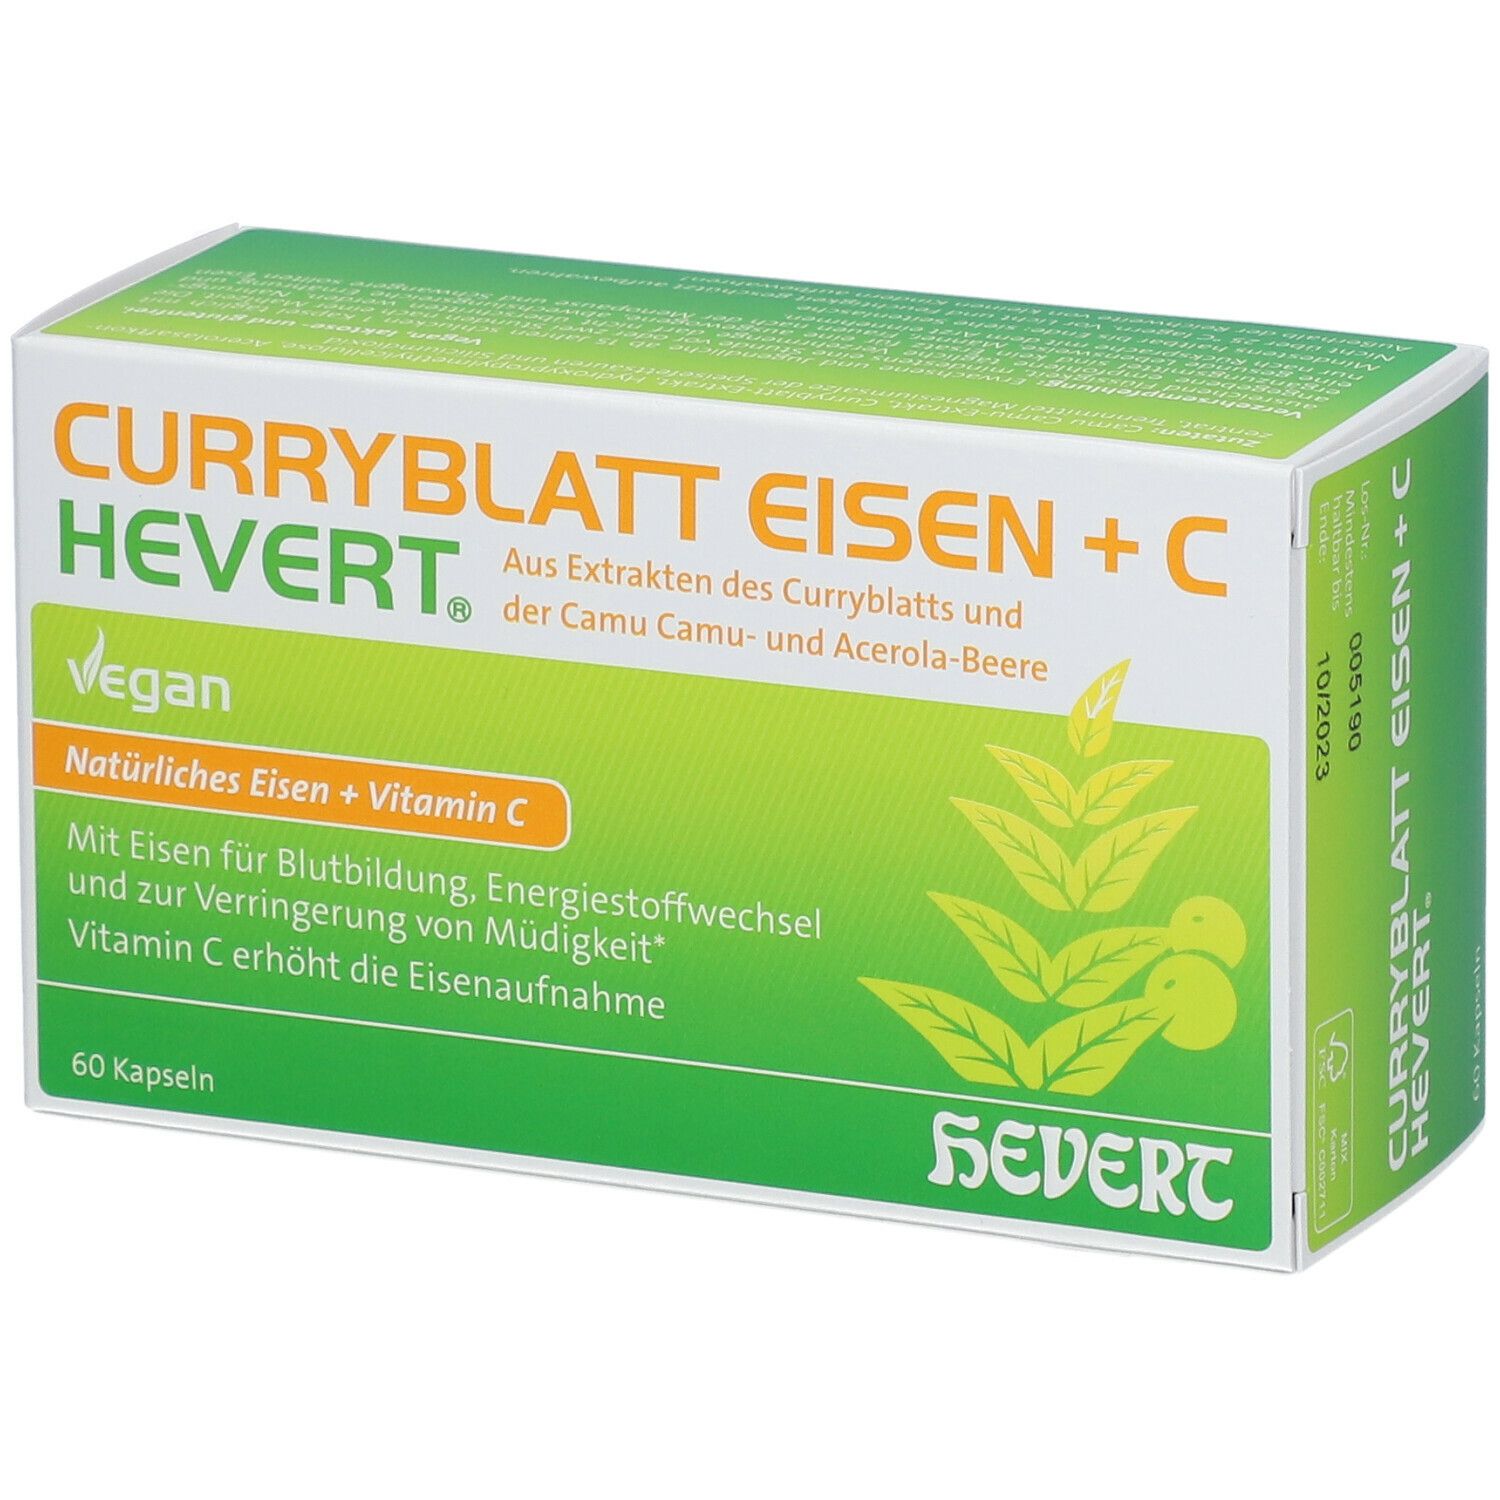 Curryblatt Eisen + C HEVERT®